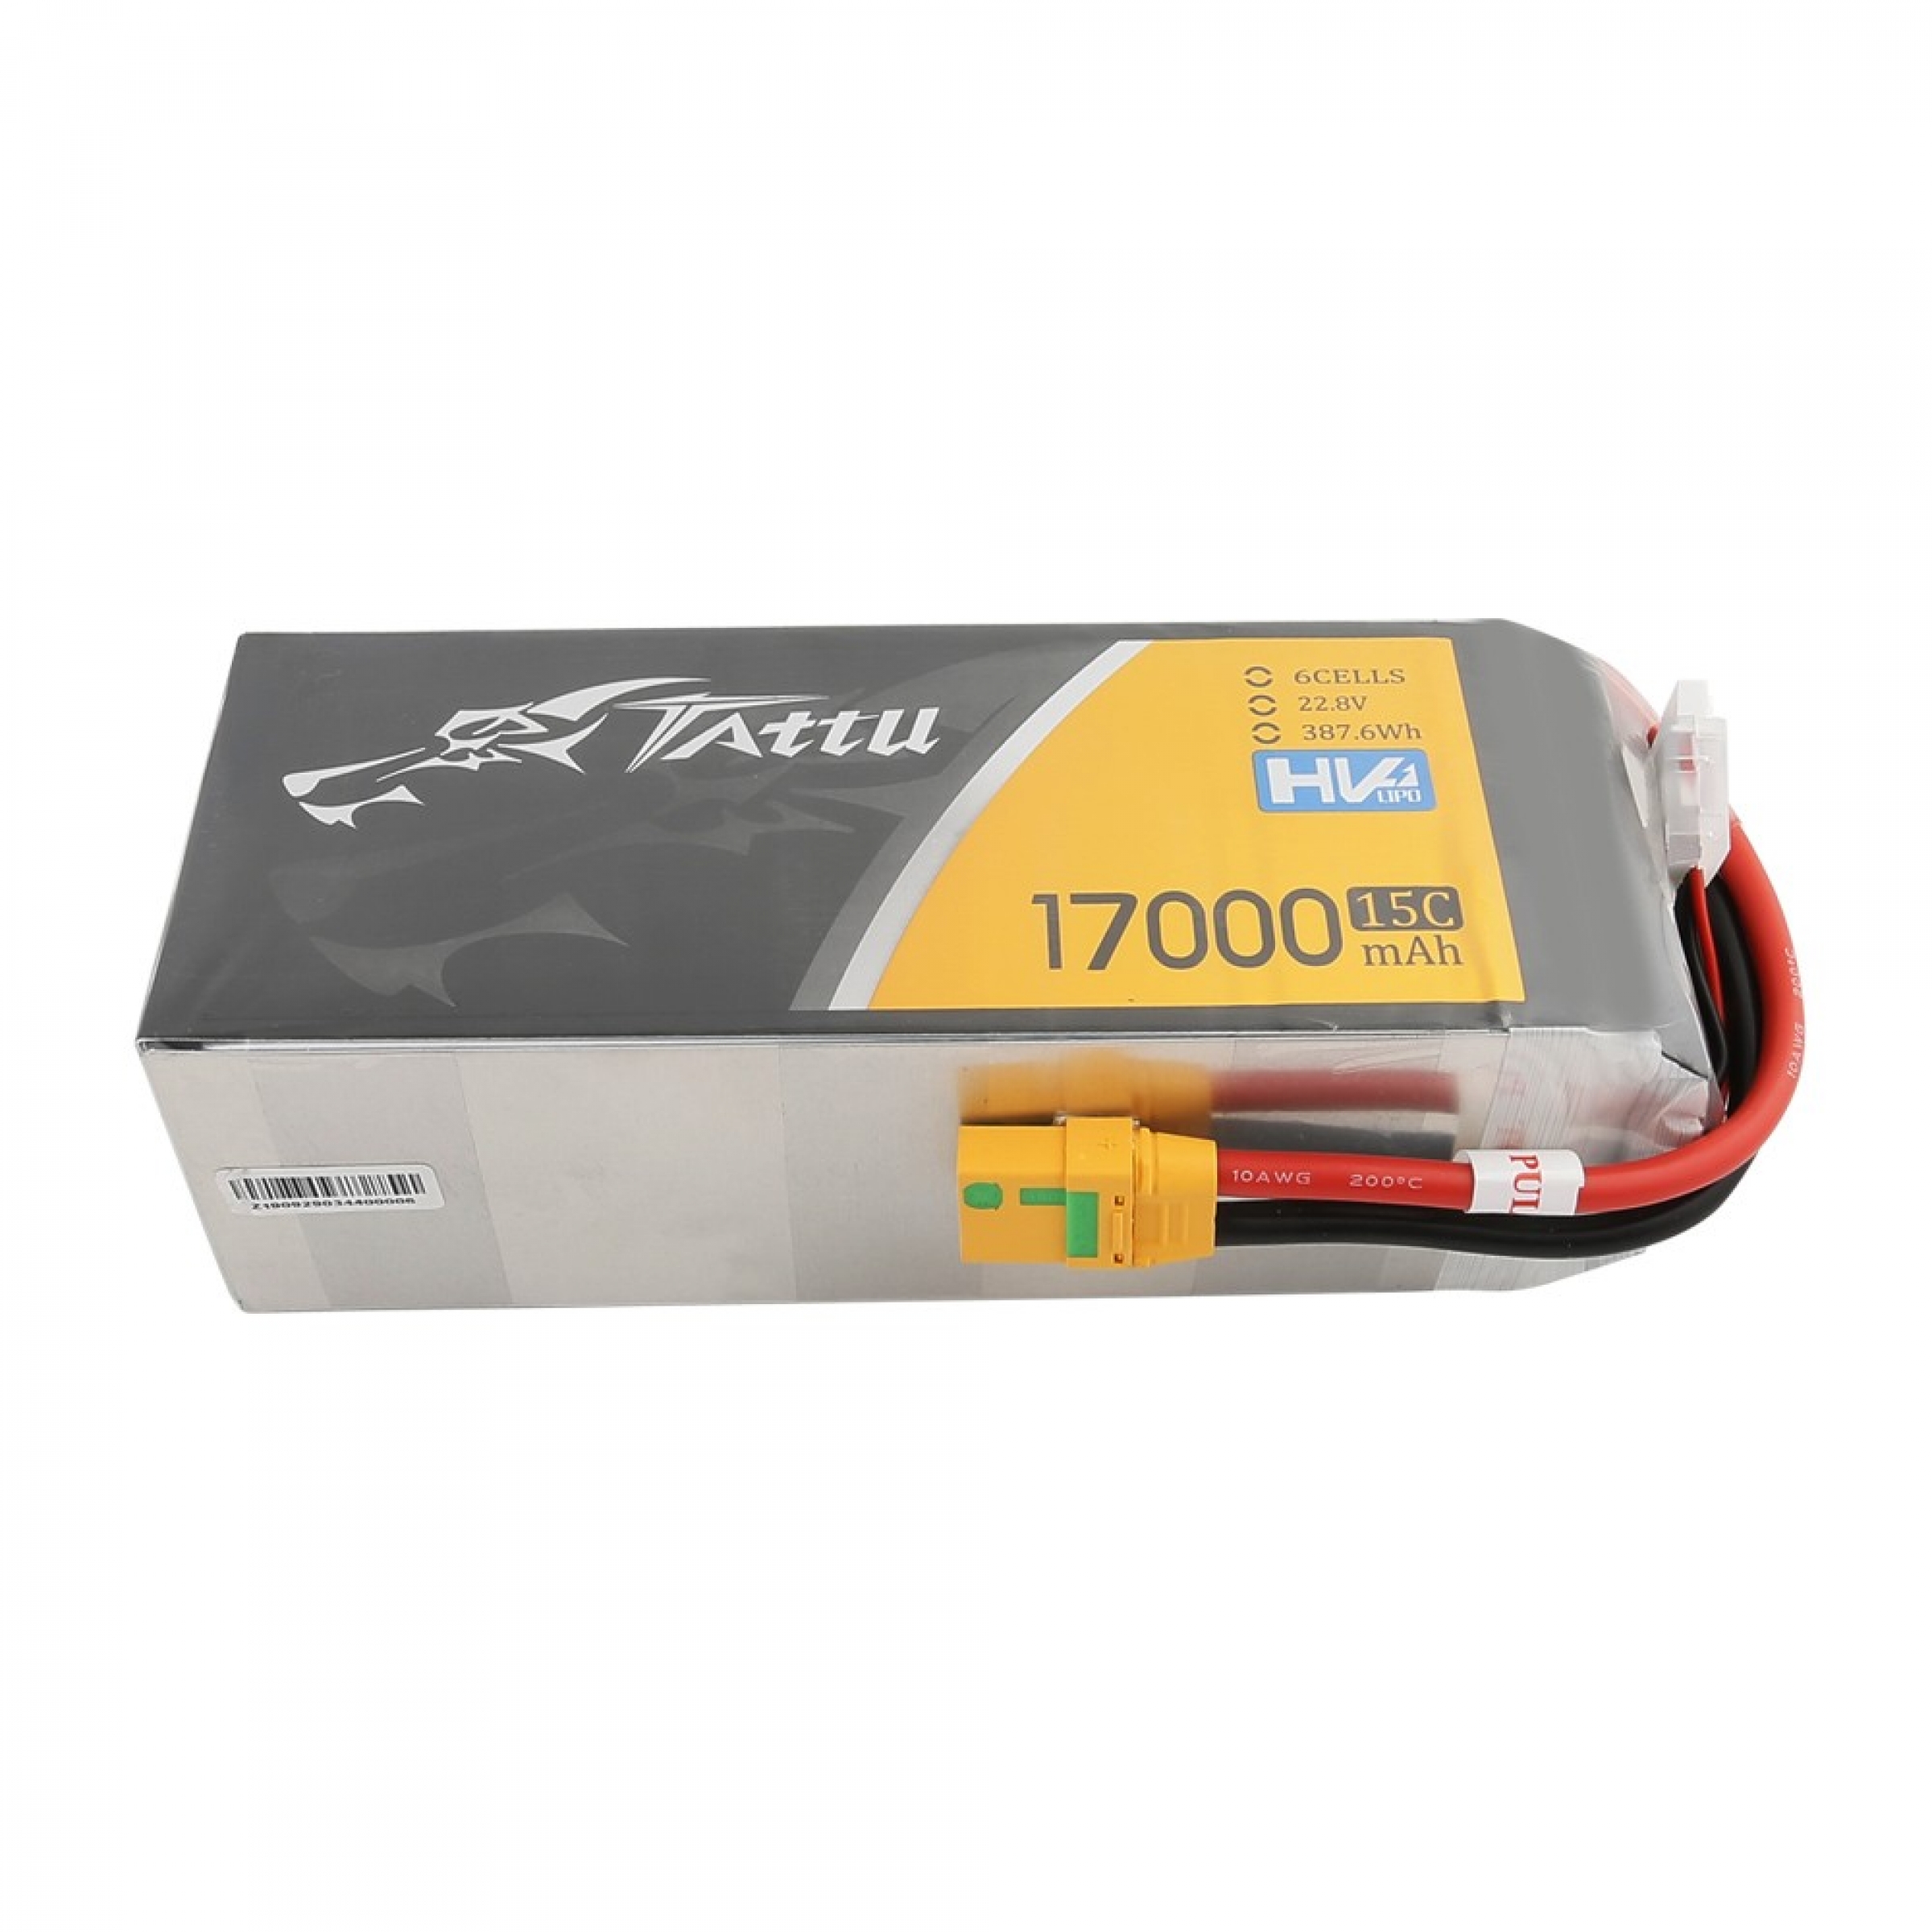 Tattu 17000mAh 22.8V 15C 6S1P Lipo Battery with XT90-S(anti-spark) Plug